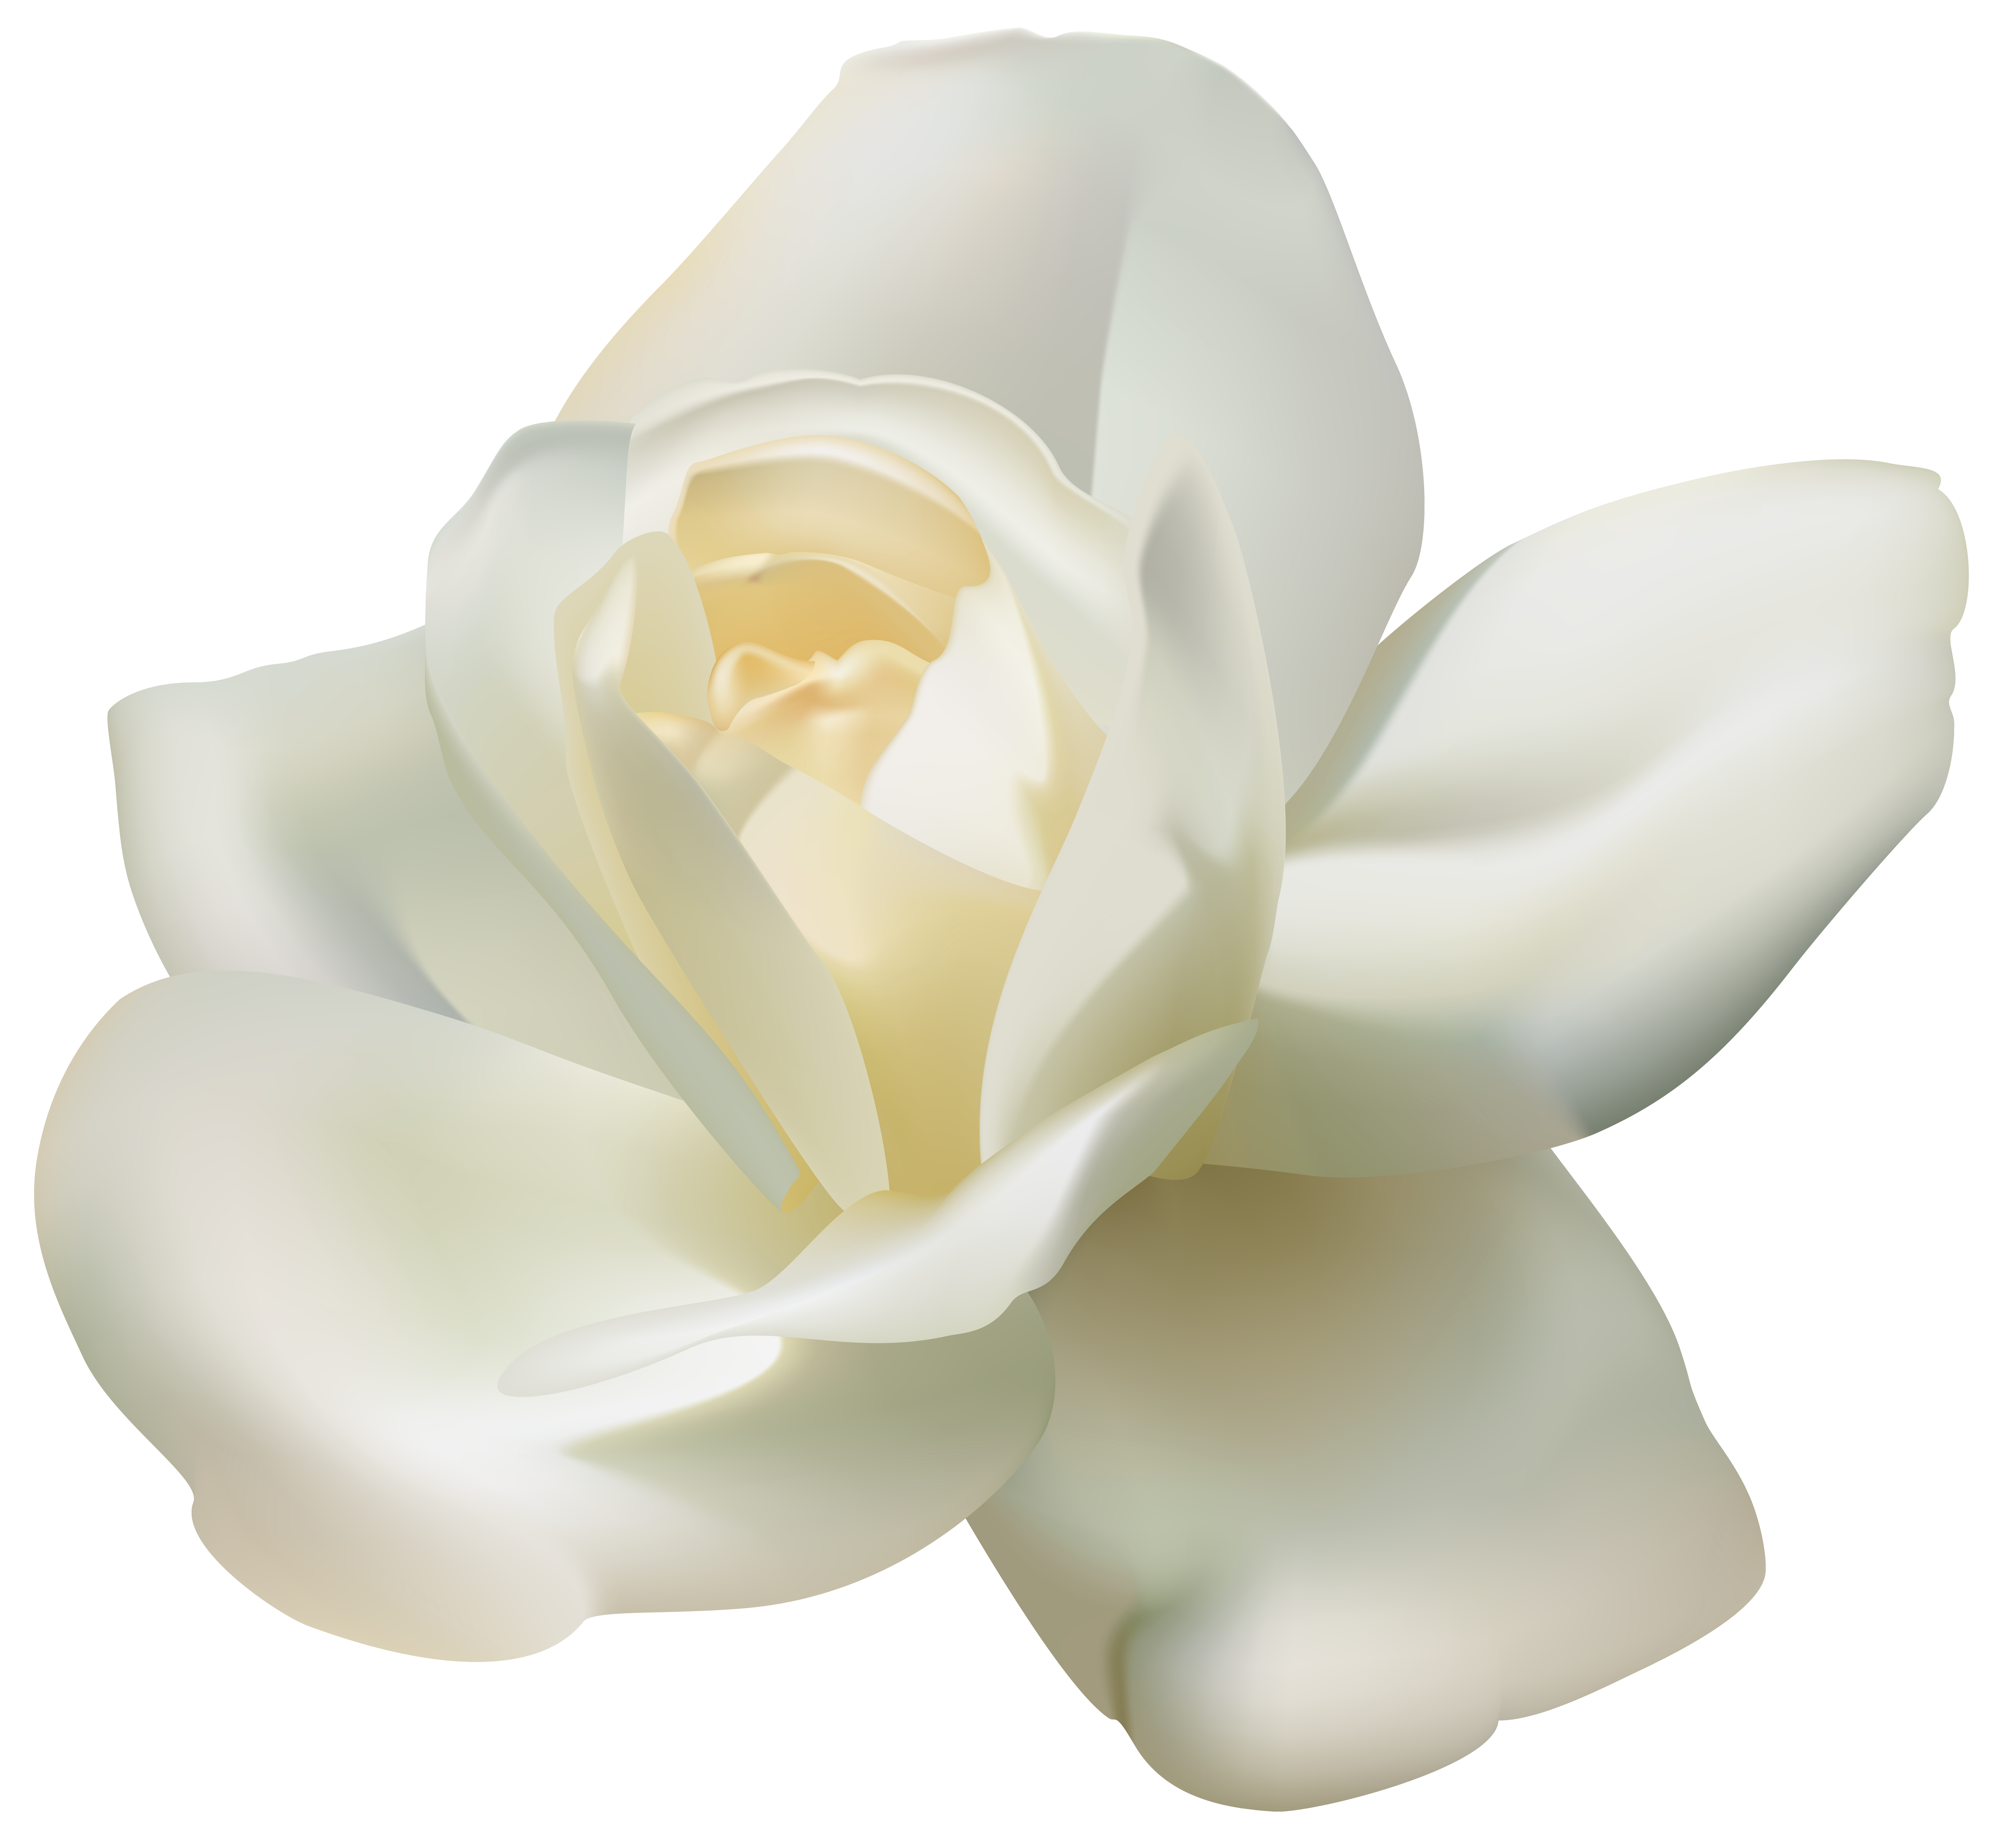 magnolia clipart gardenia flower